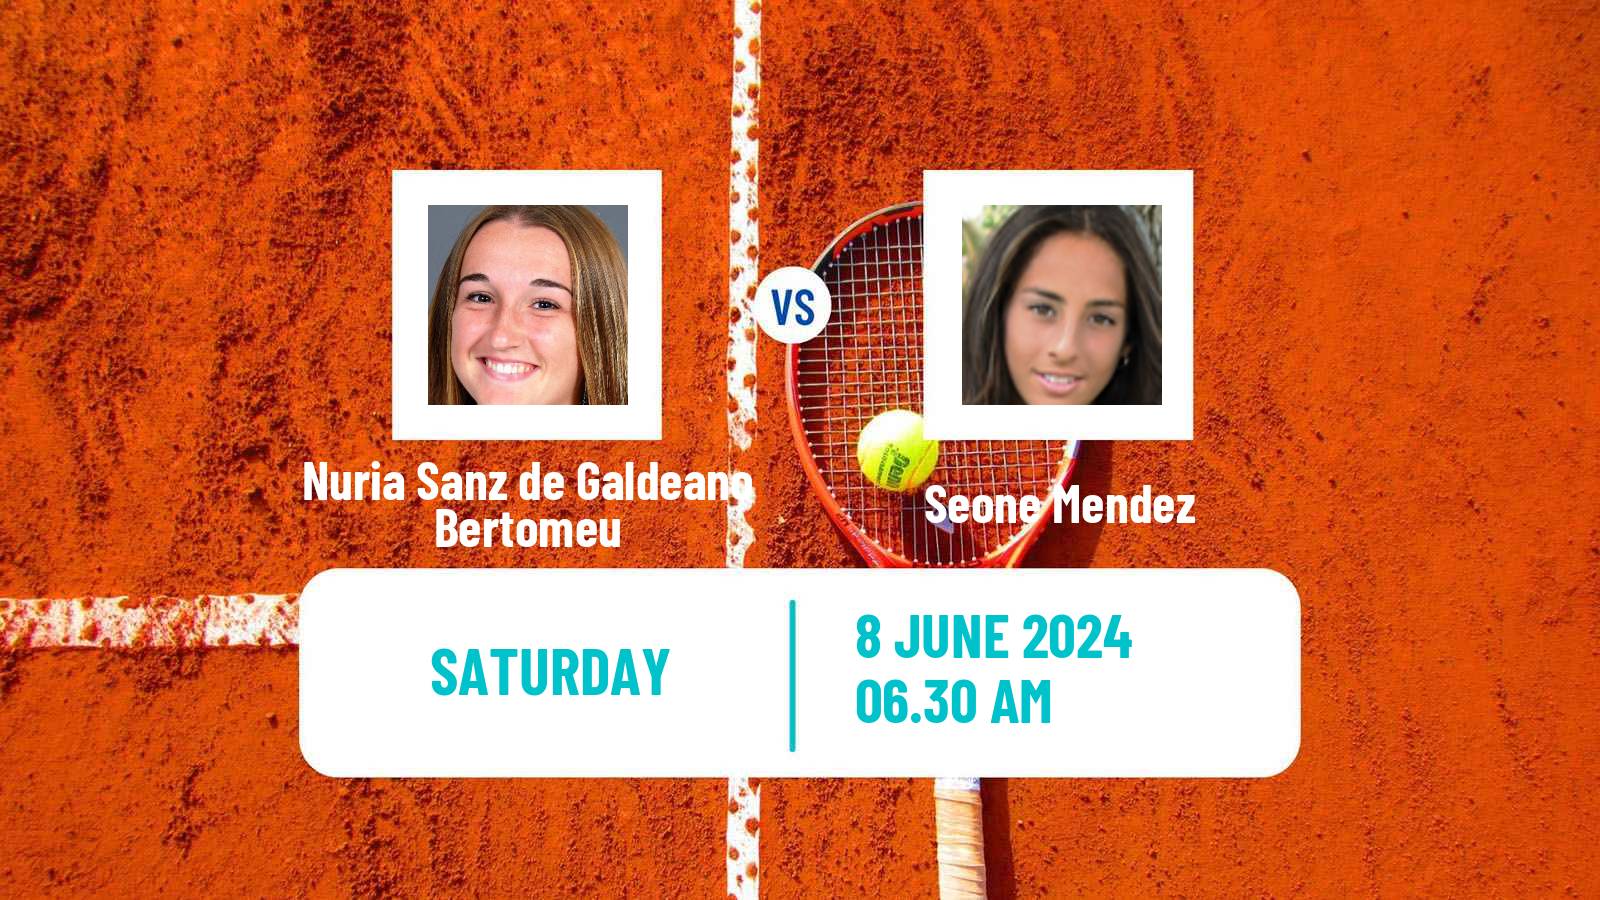 Tennis Valencia Challenger Women Nuria Sanz de Galdeano Bertomeu - Seone Mendez